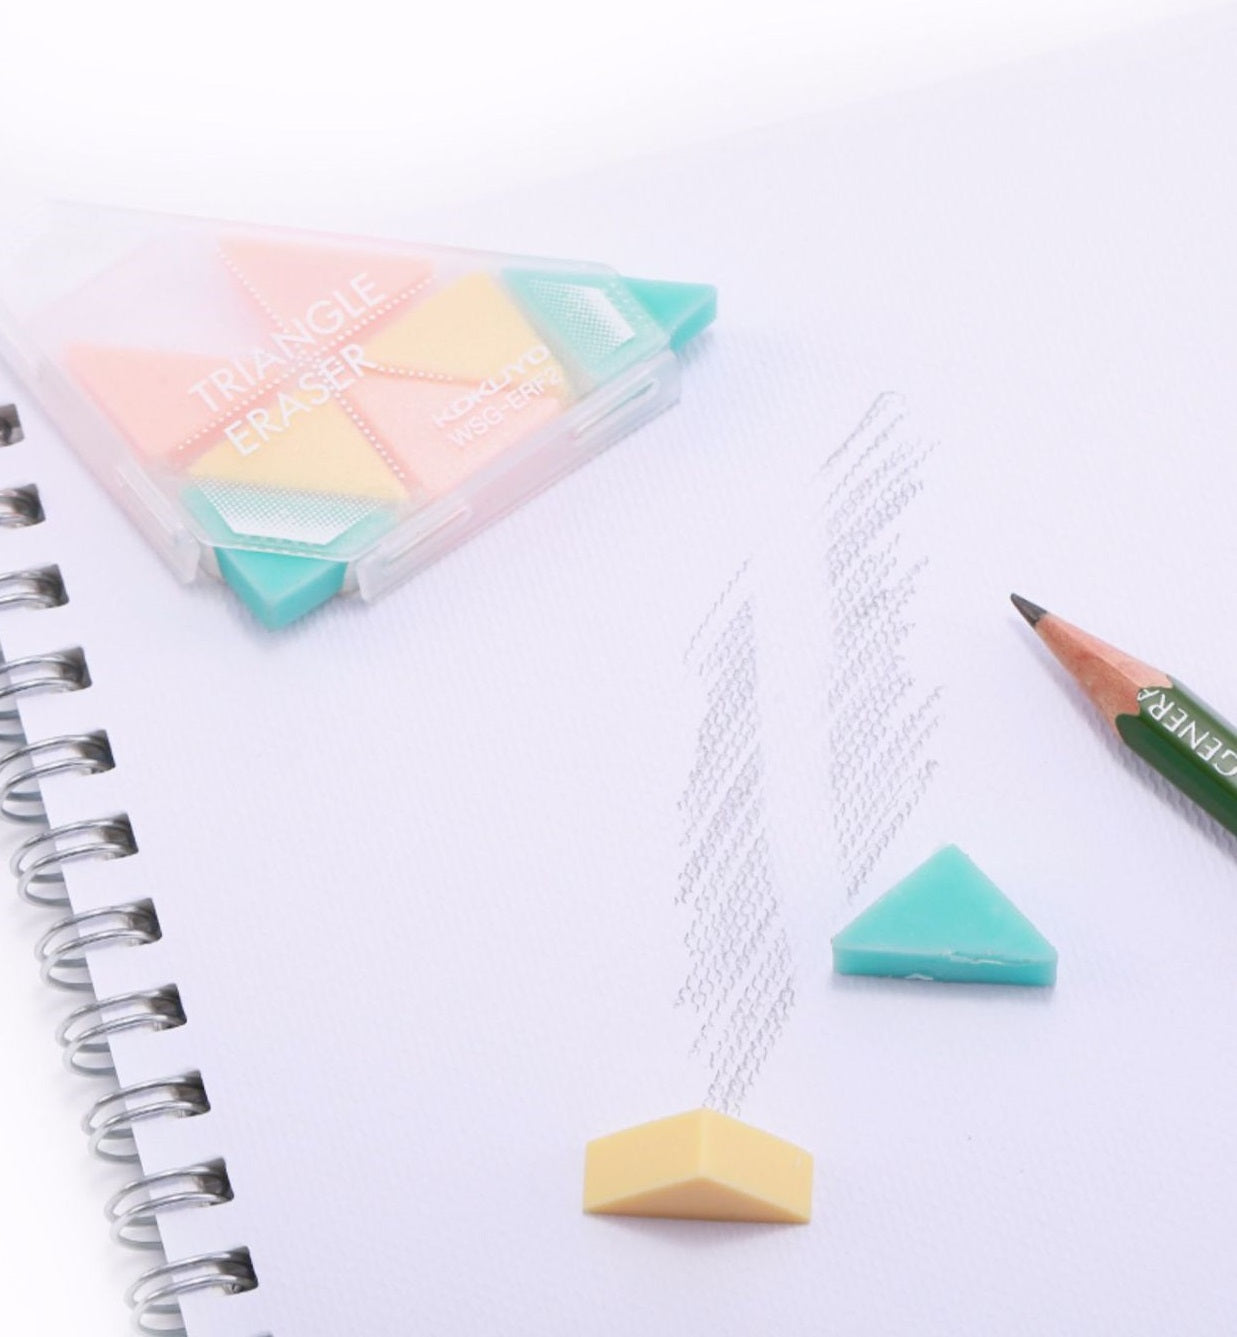 KOKUYO Triangular Eraser Pastel Cookie 4 Pack